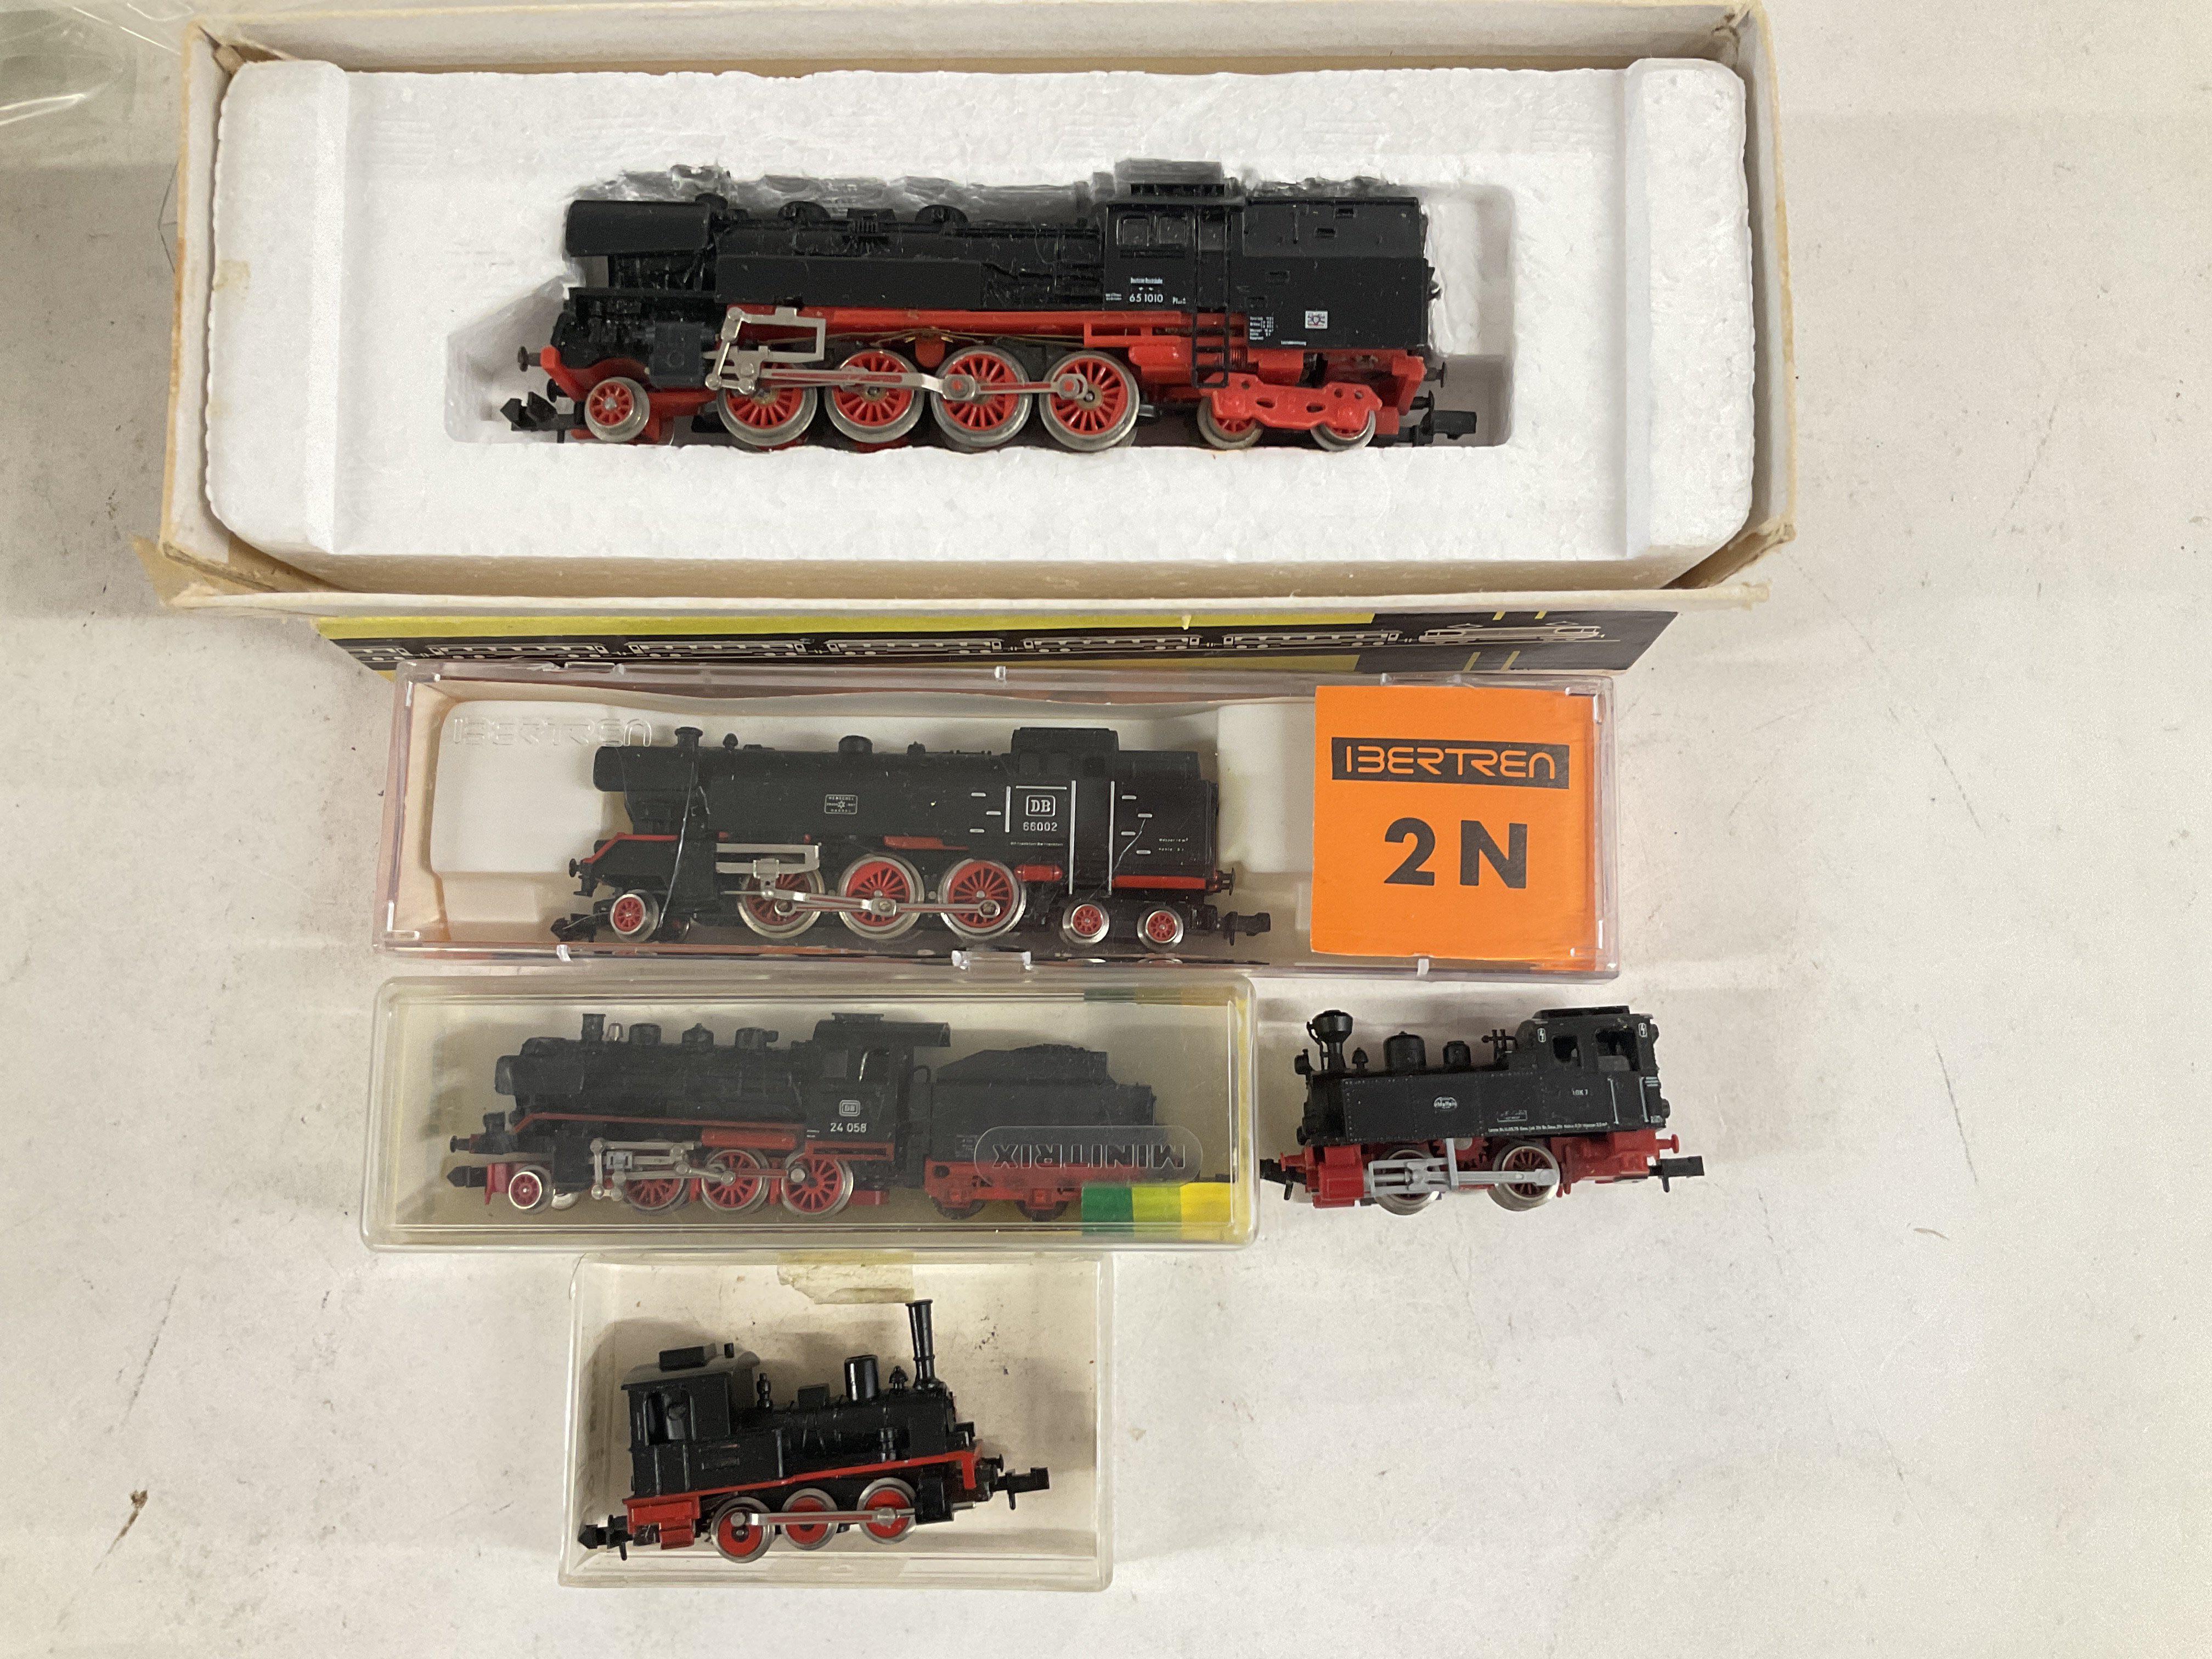 A Collection of N Gauge Locomotives Including 2 X ibertren Locos. 2 X Minitrix and a Fleischmann.